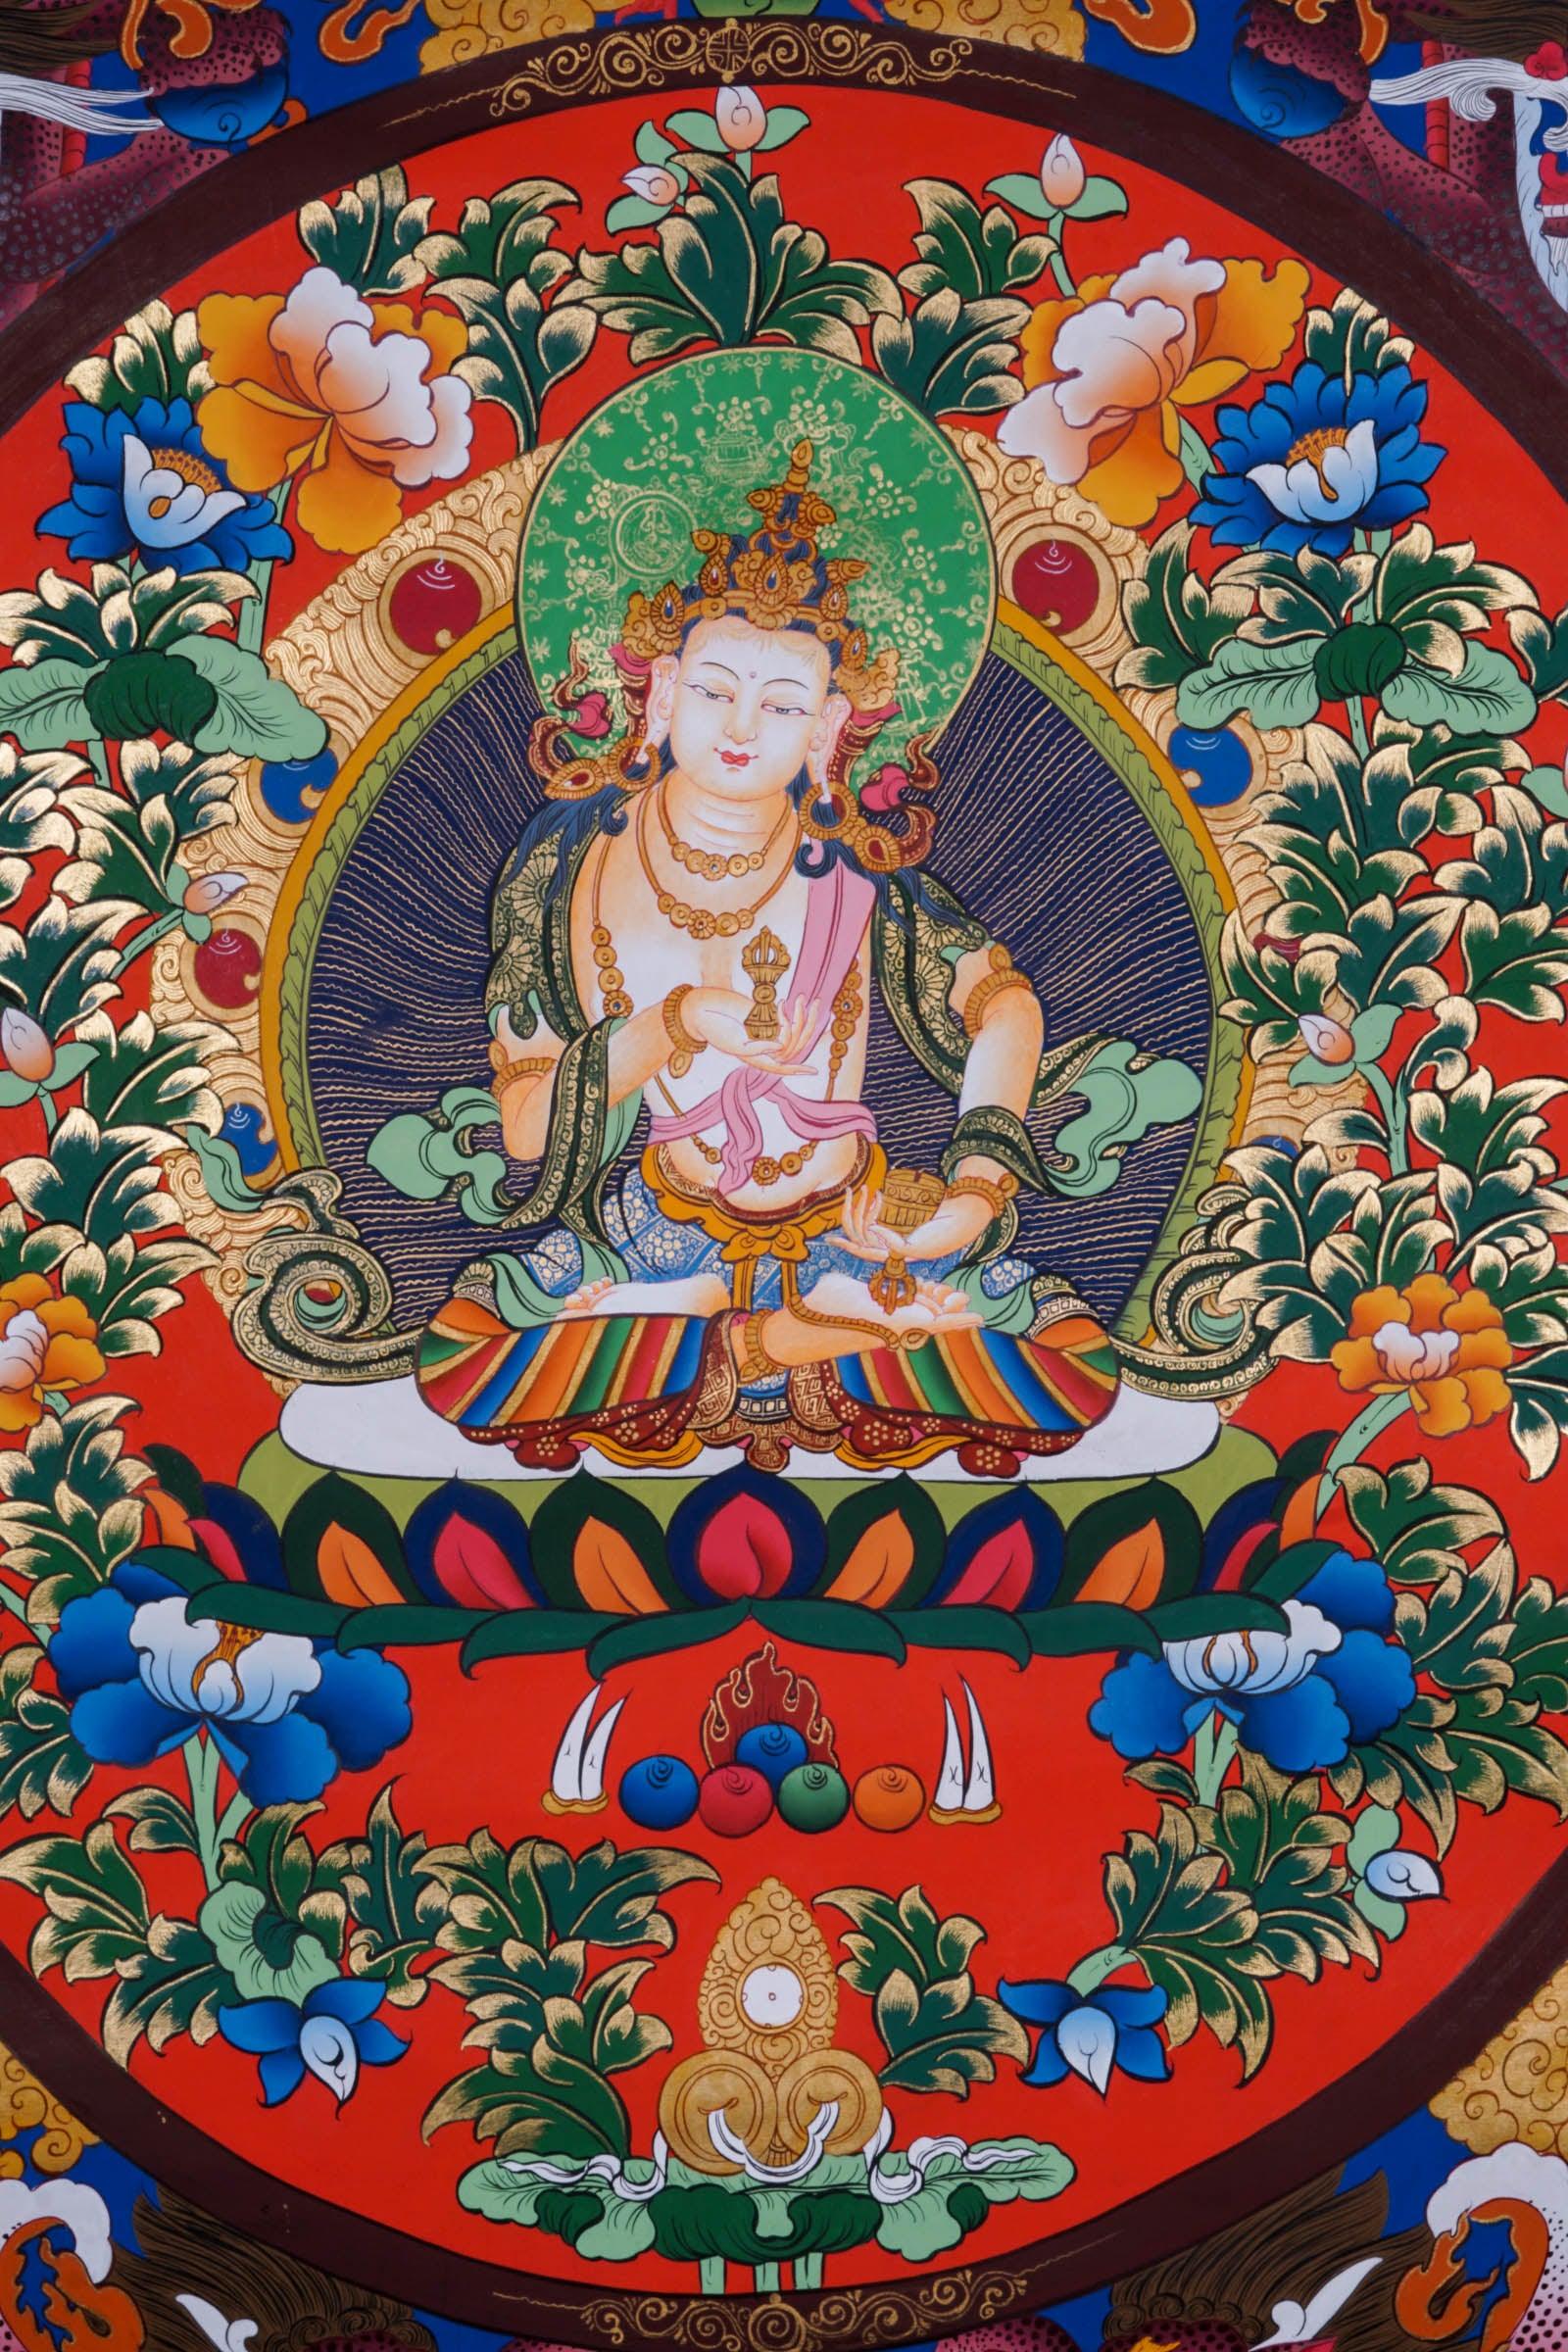 Bajrasattwa Thangka Painting - Himalayas Shop